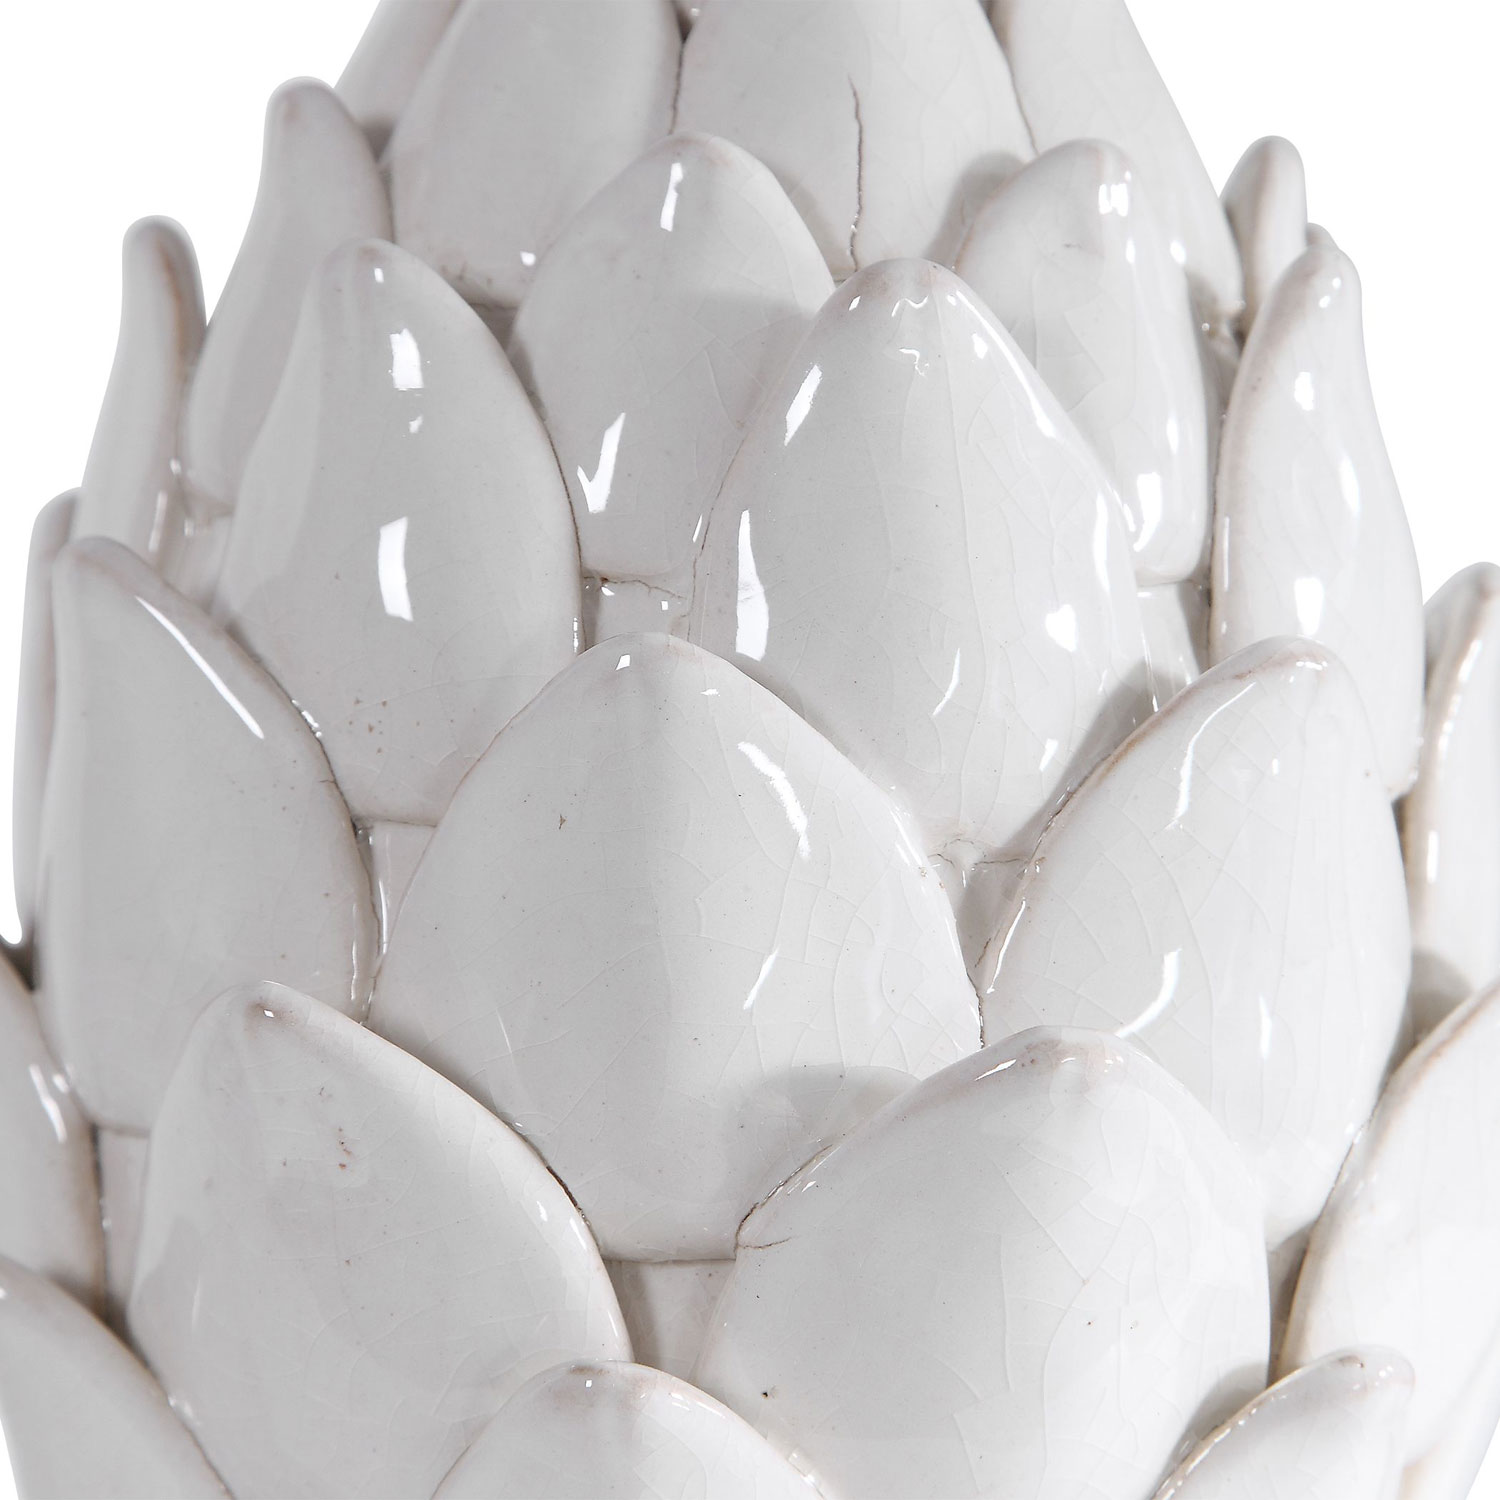 Uttermost White Table Lamp - Artichoke